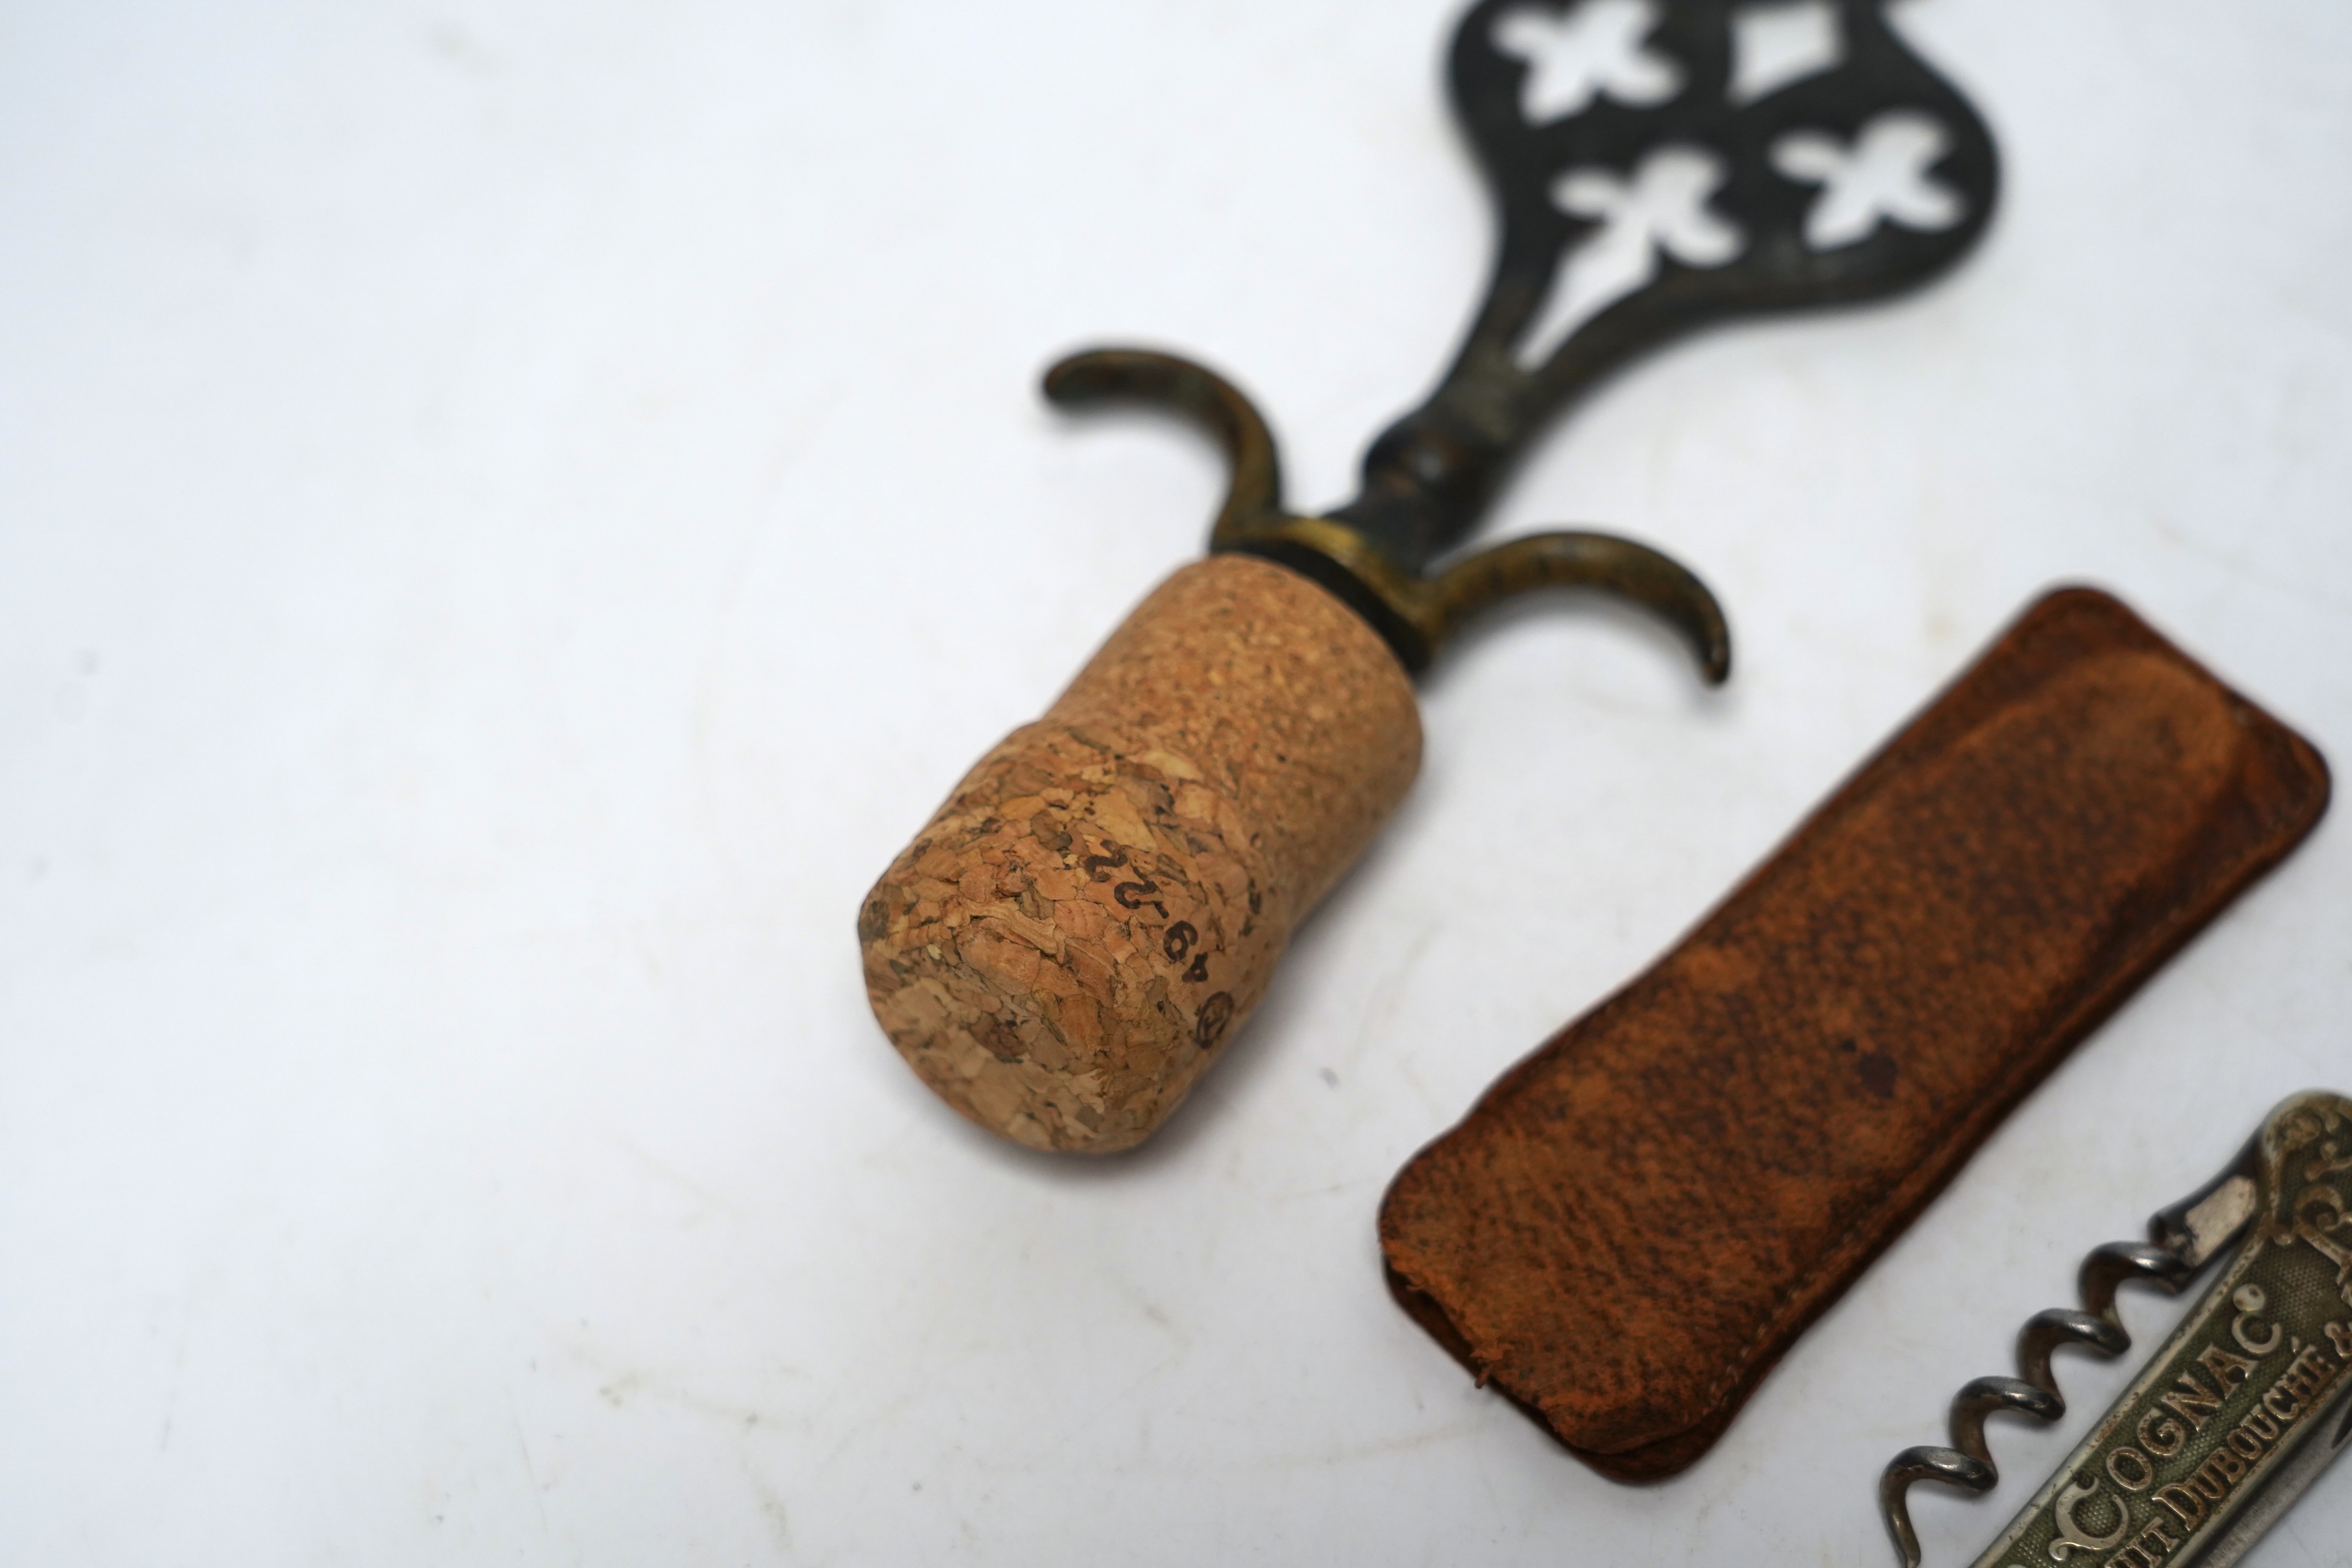 Two corkscrews; one advertising Jean E Sottiris-Le Caire, on reverse, Cognac Bisquit, Bisquit Du Bouche &Cie Cognac together with an ornate brass corkscrew largest 14cm